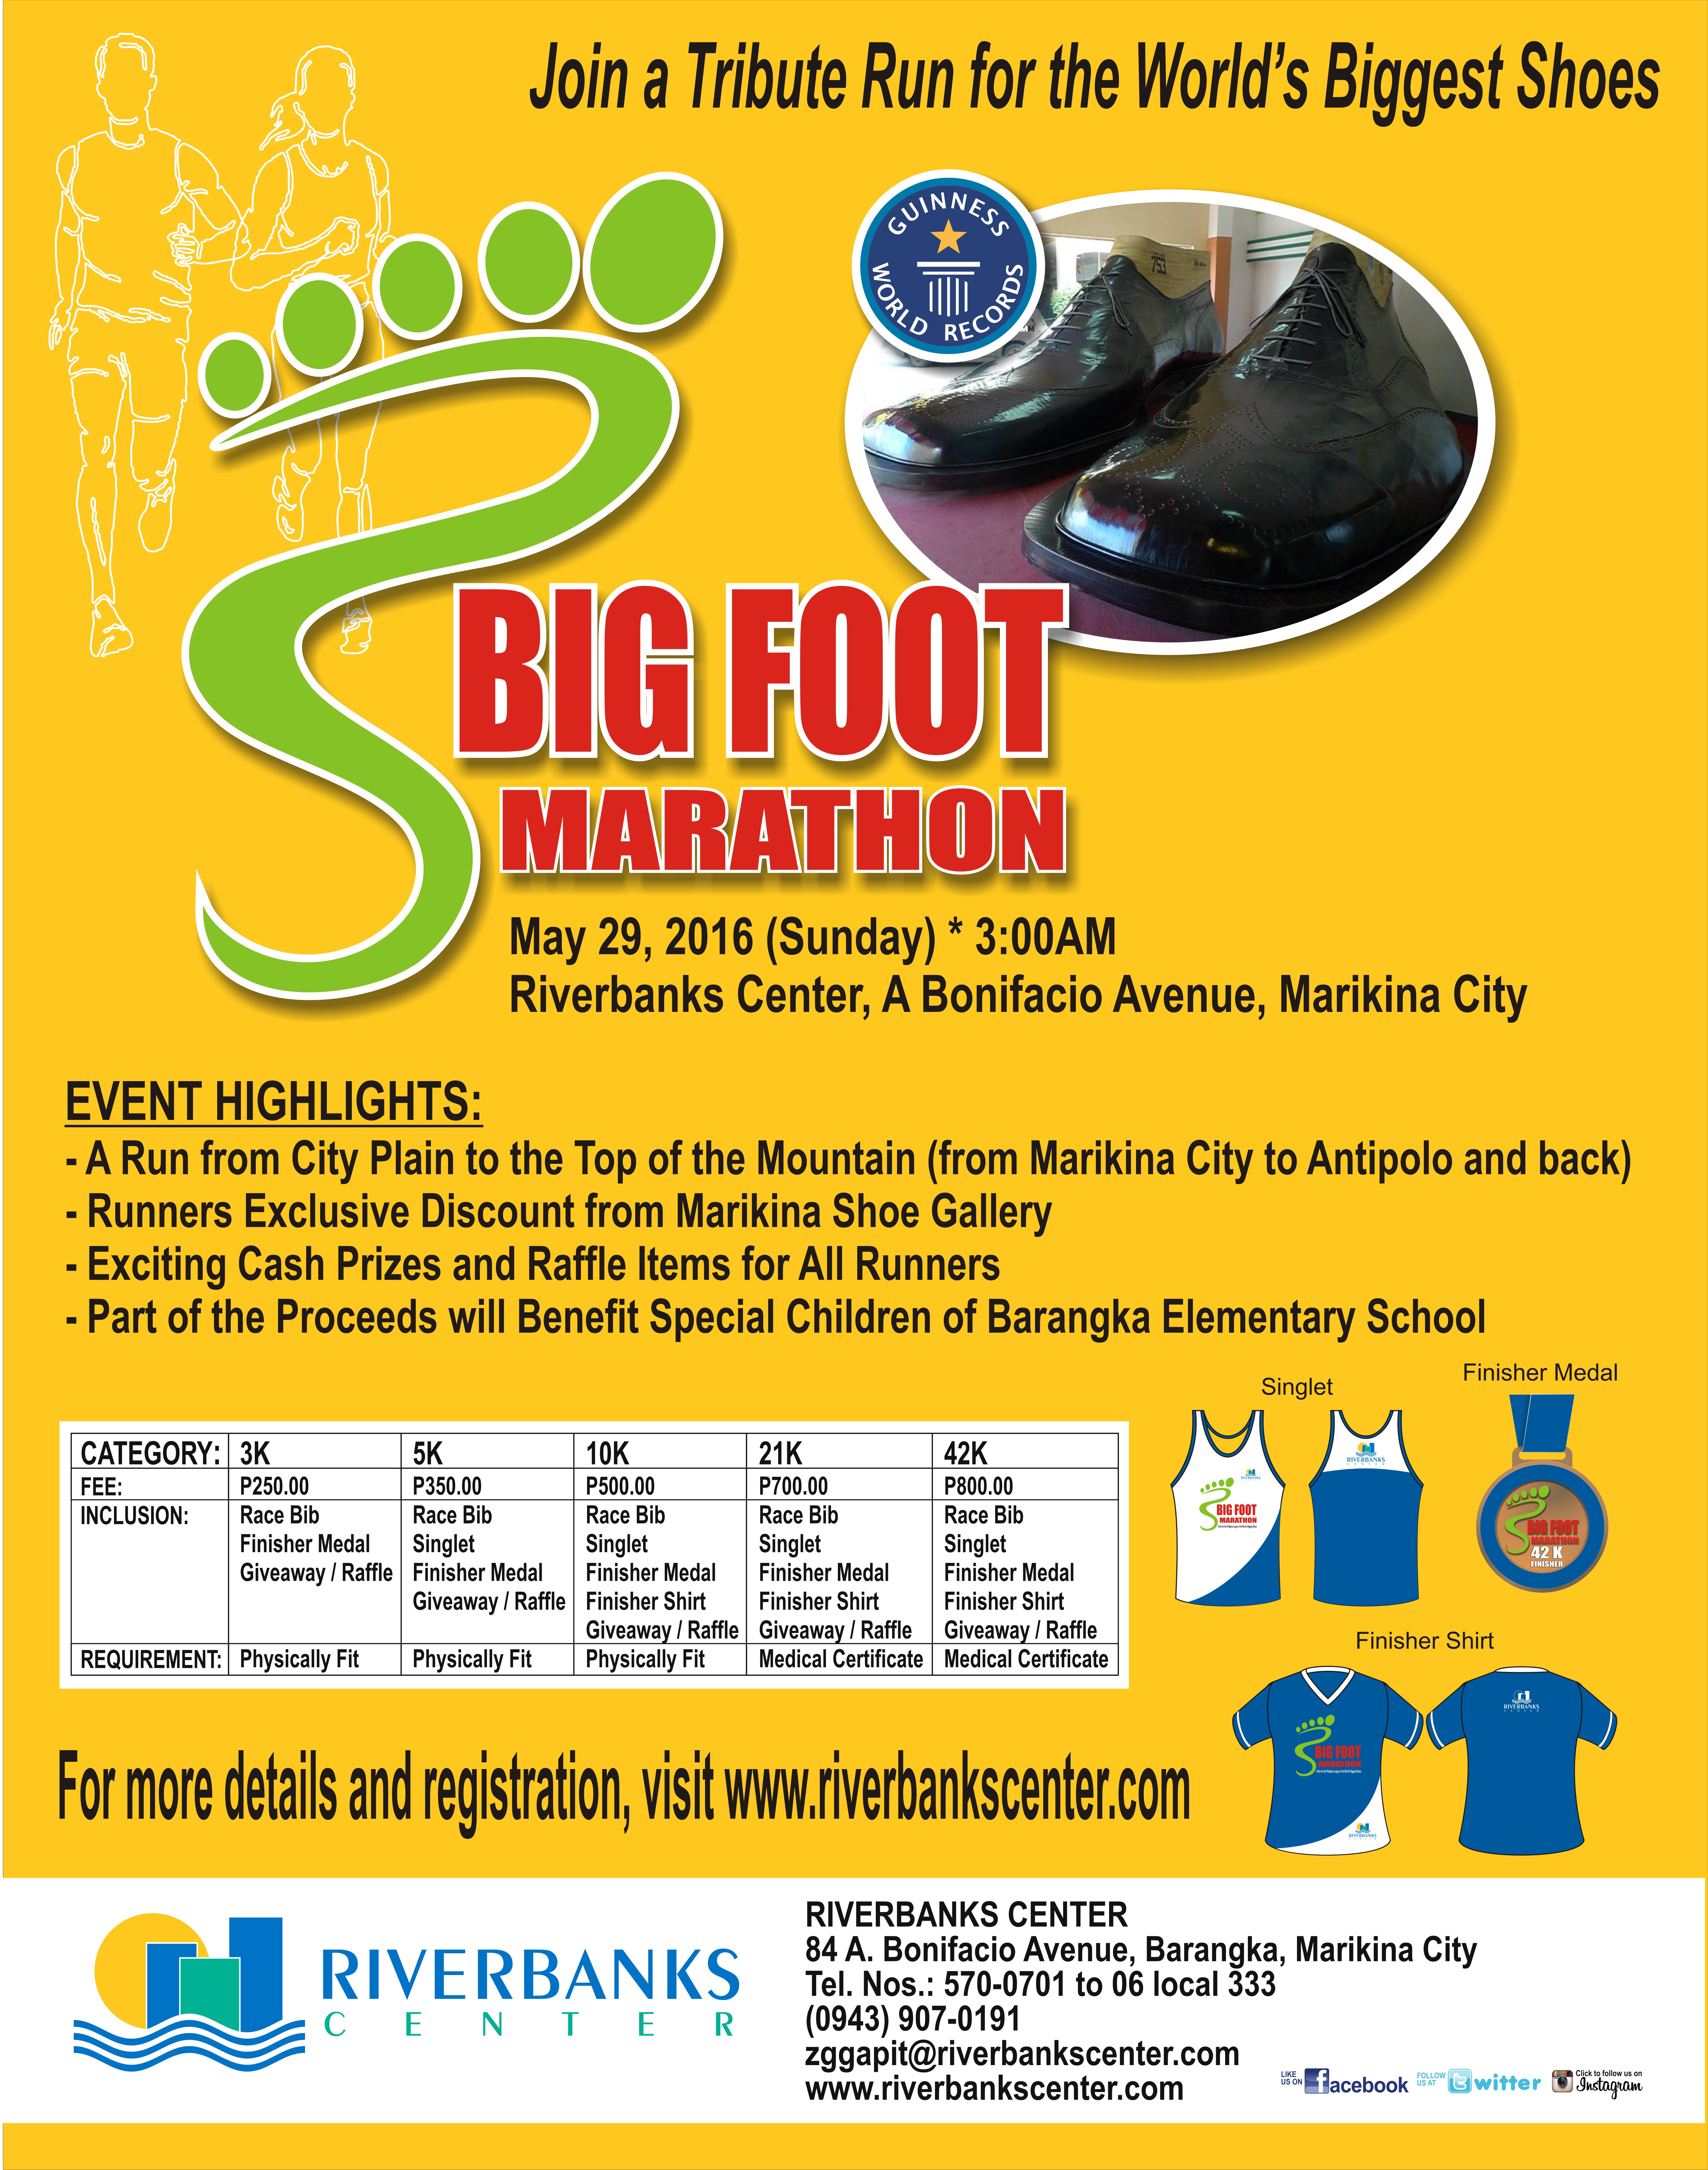 Big Foot Marathon Revised Poster 5-14